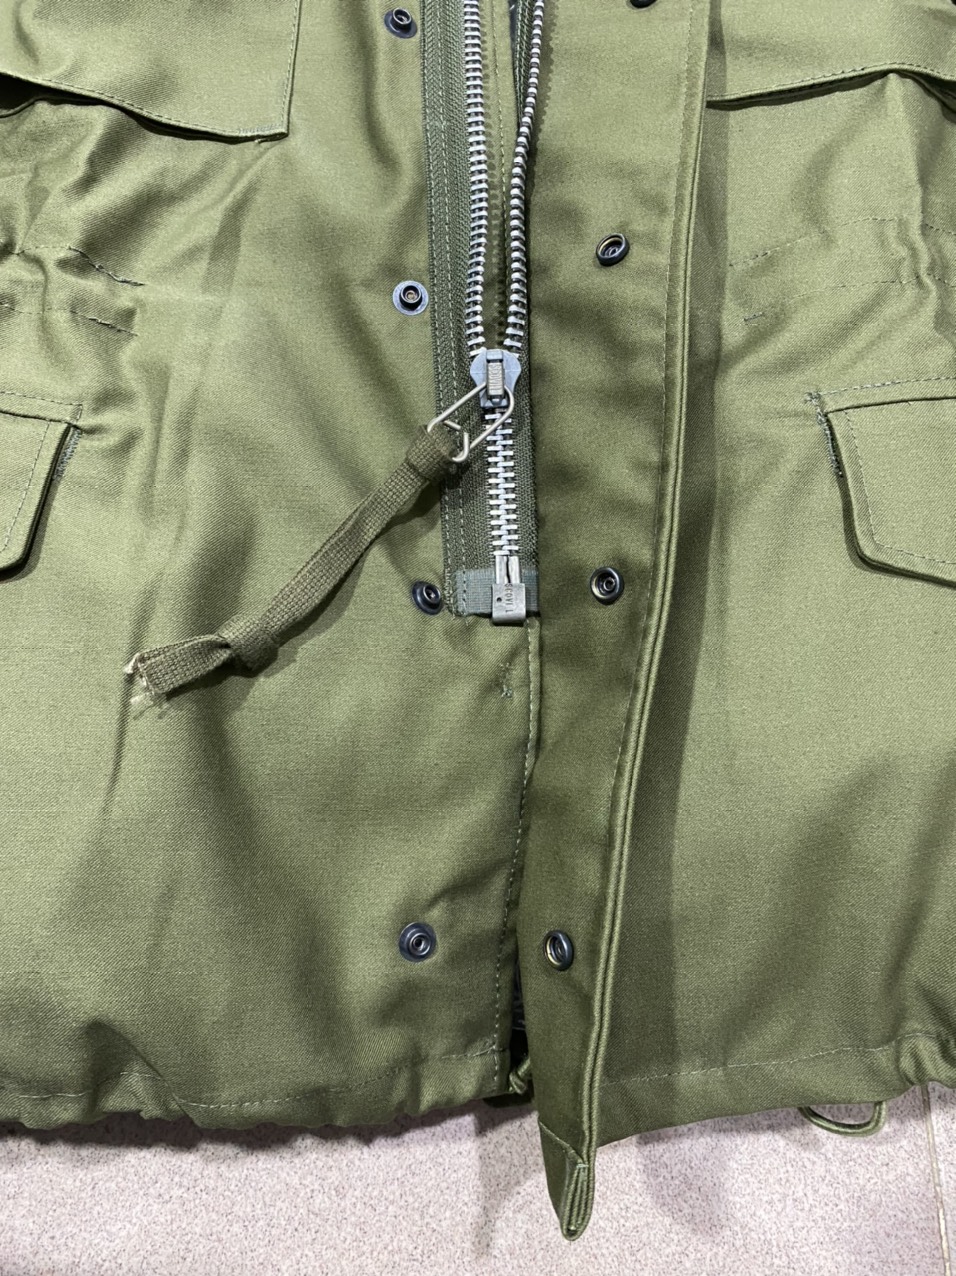 Áo M65 Field jacket Khóa Nhôm Màu Xanh Oliver OG 107